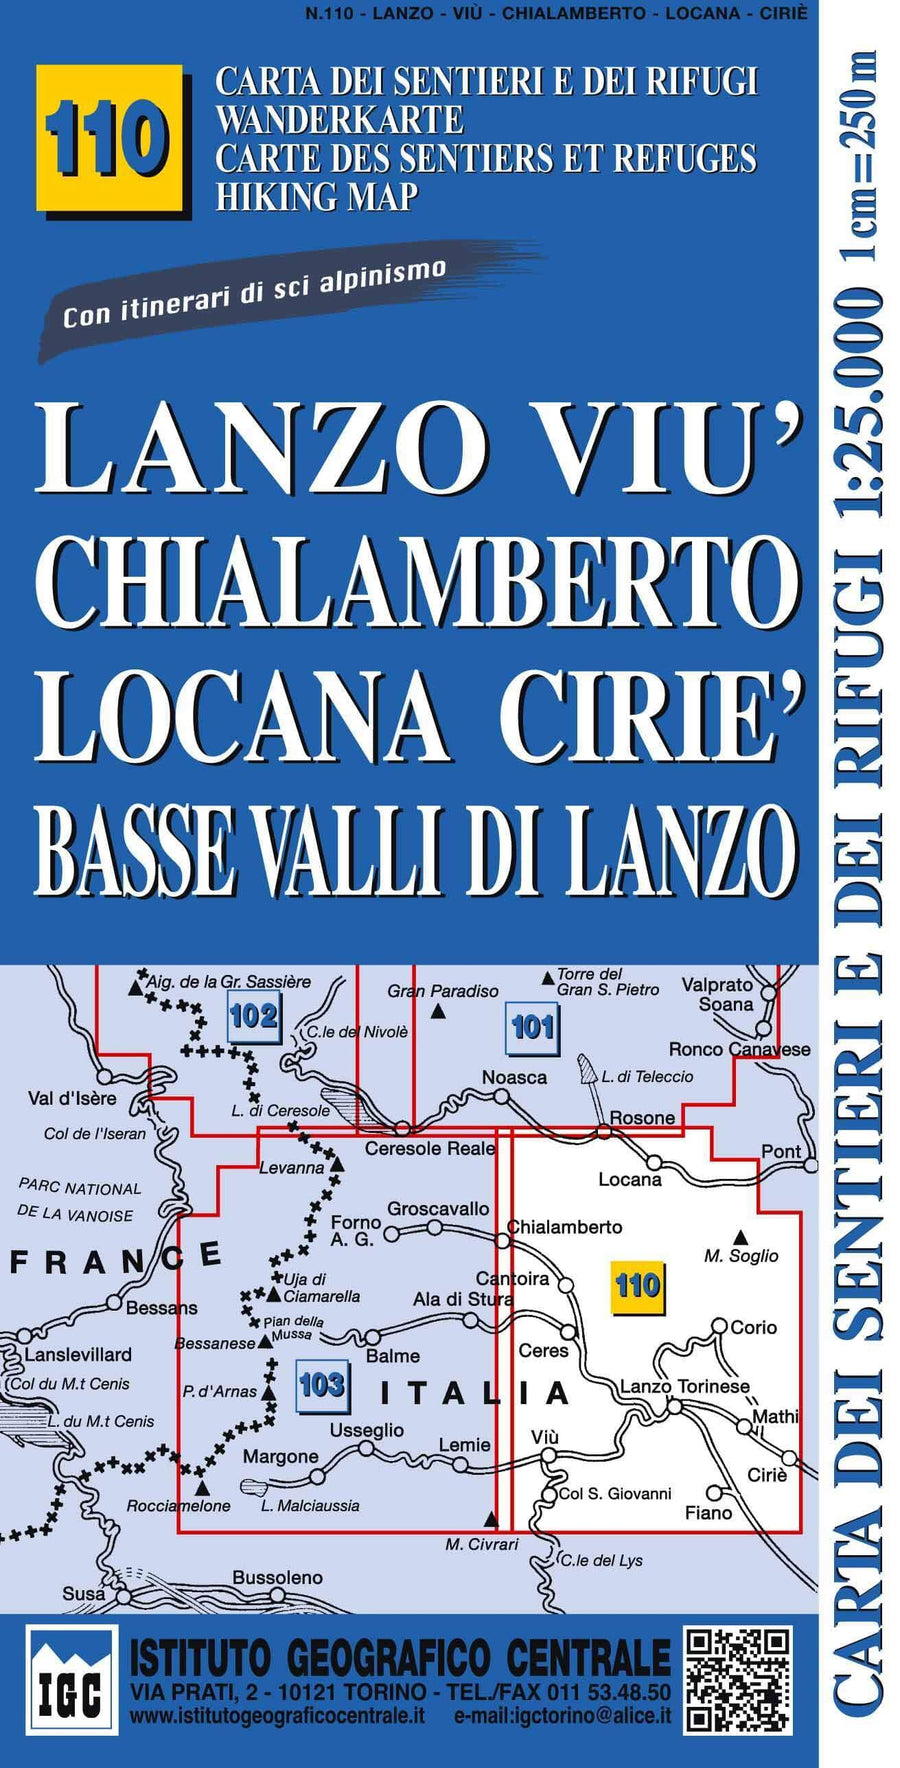 Lanzo Viu' Chialamberto - Locana - Cirie' - Basse Valli di Lanzo | Istituto Geografico Centrale Hiking Map 